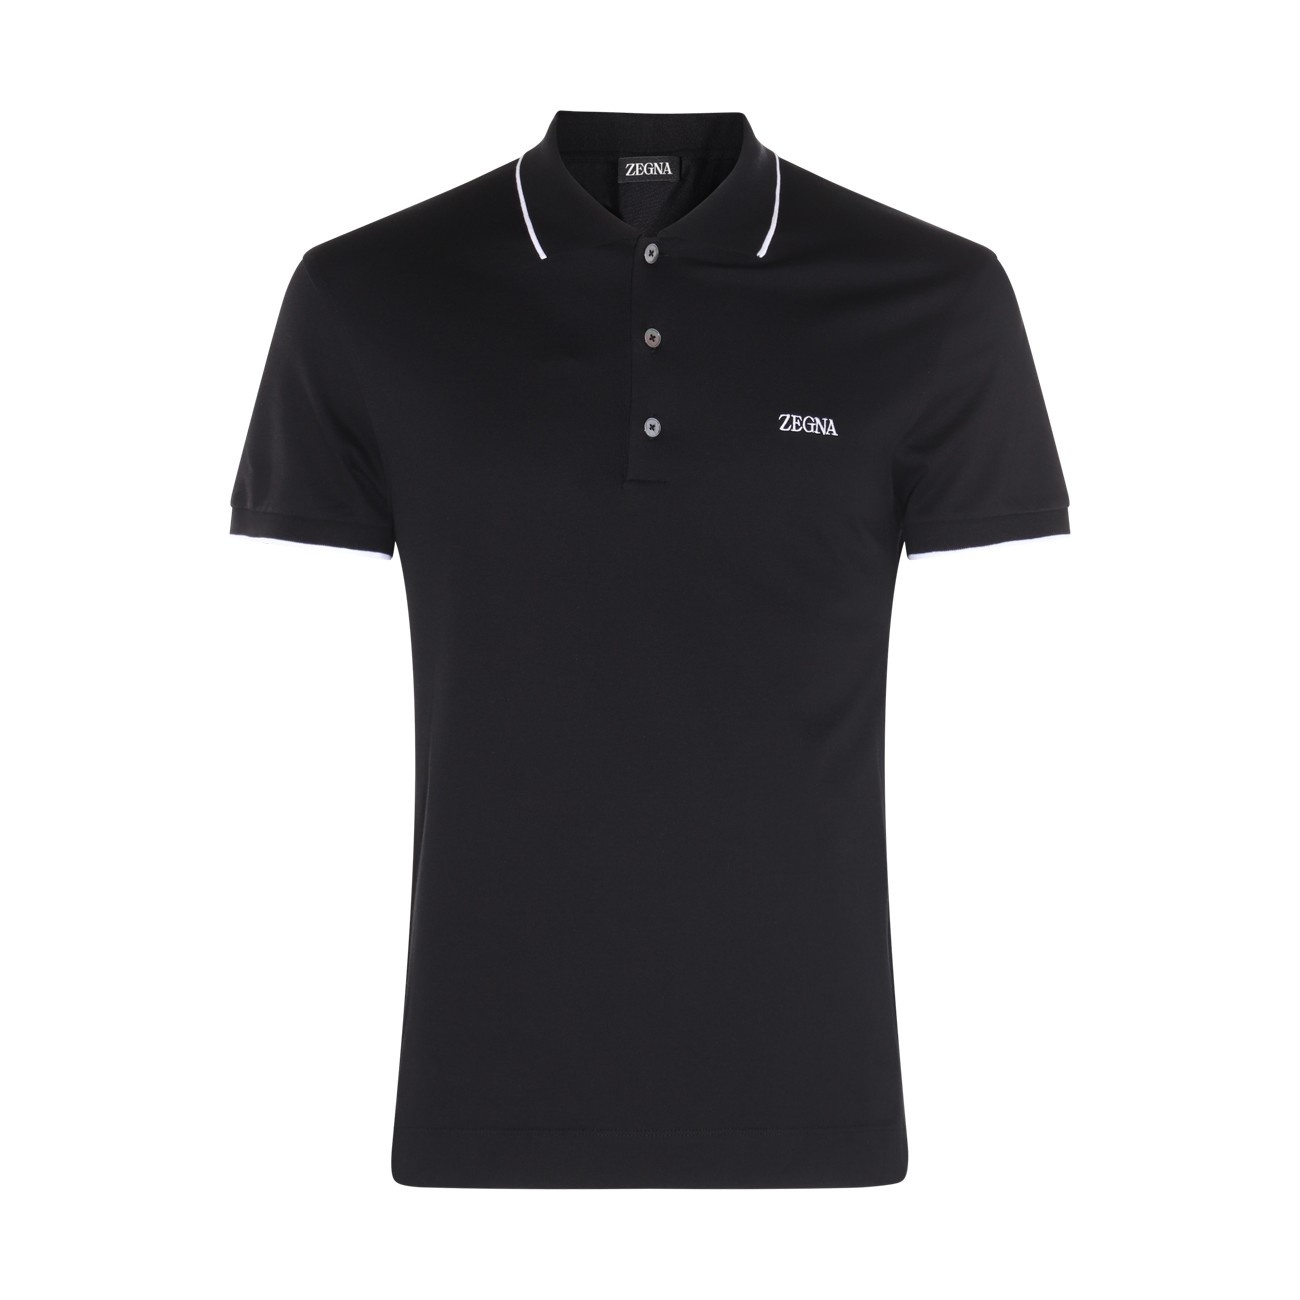 black and white cotton polo shirt - 1